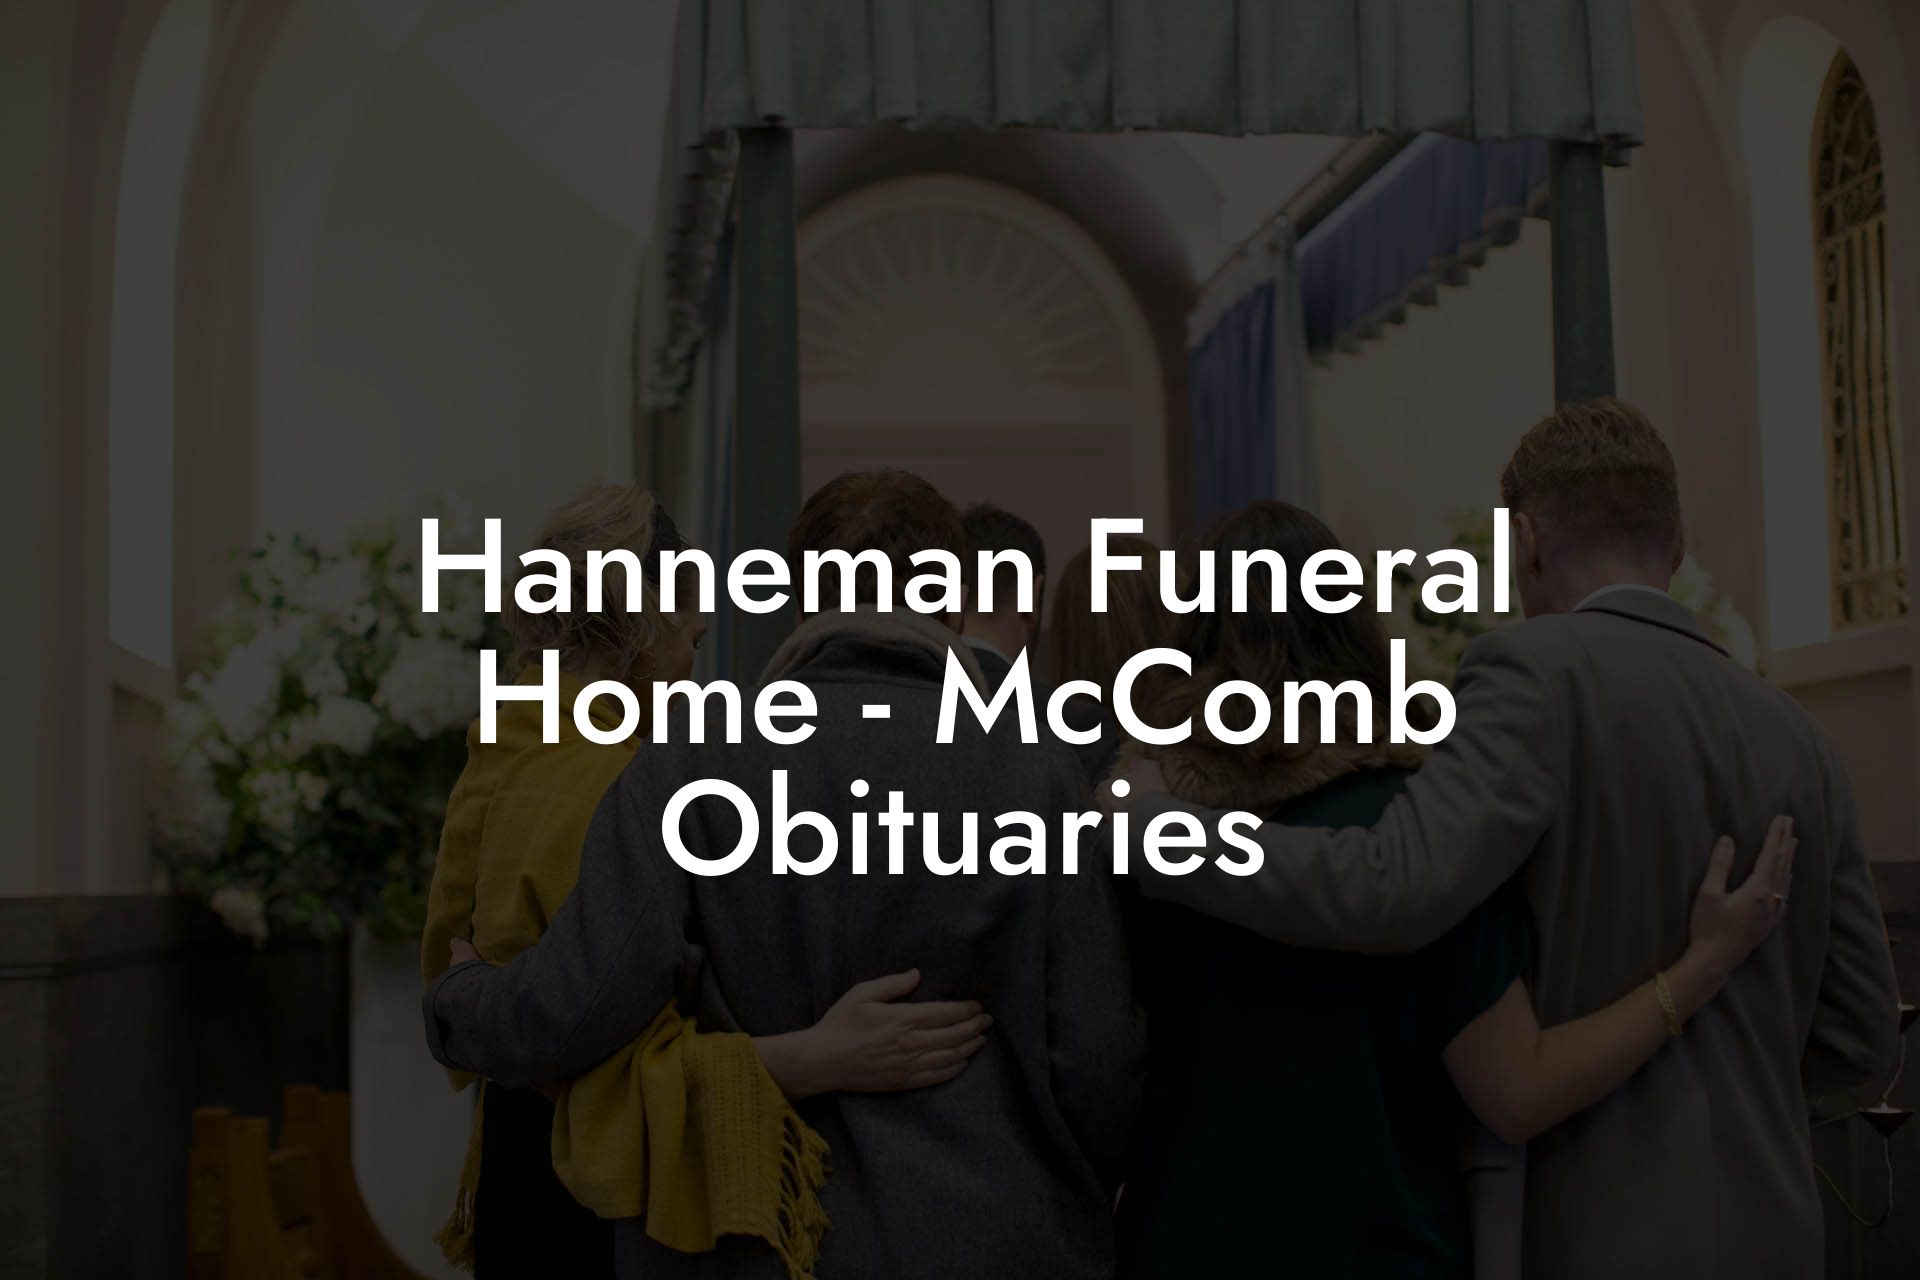 Hanneman Funeral Home - McComb Obituaries